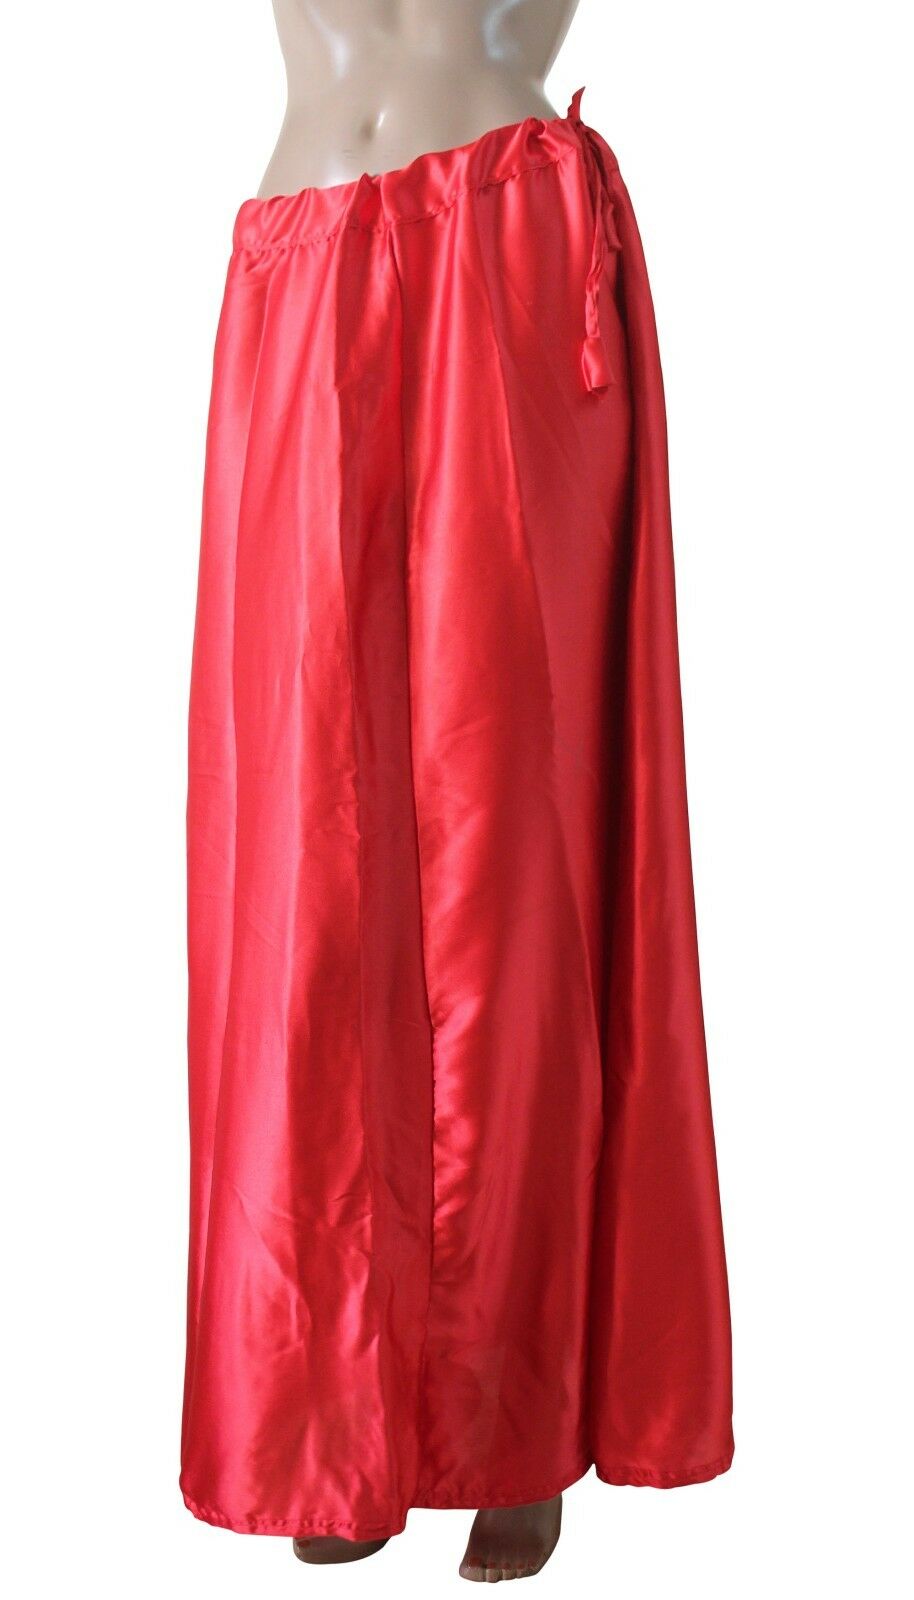 Red  Luxurious soft satin skirt saree Petticoat Underskirt belly dancing  slip